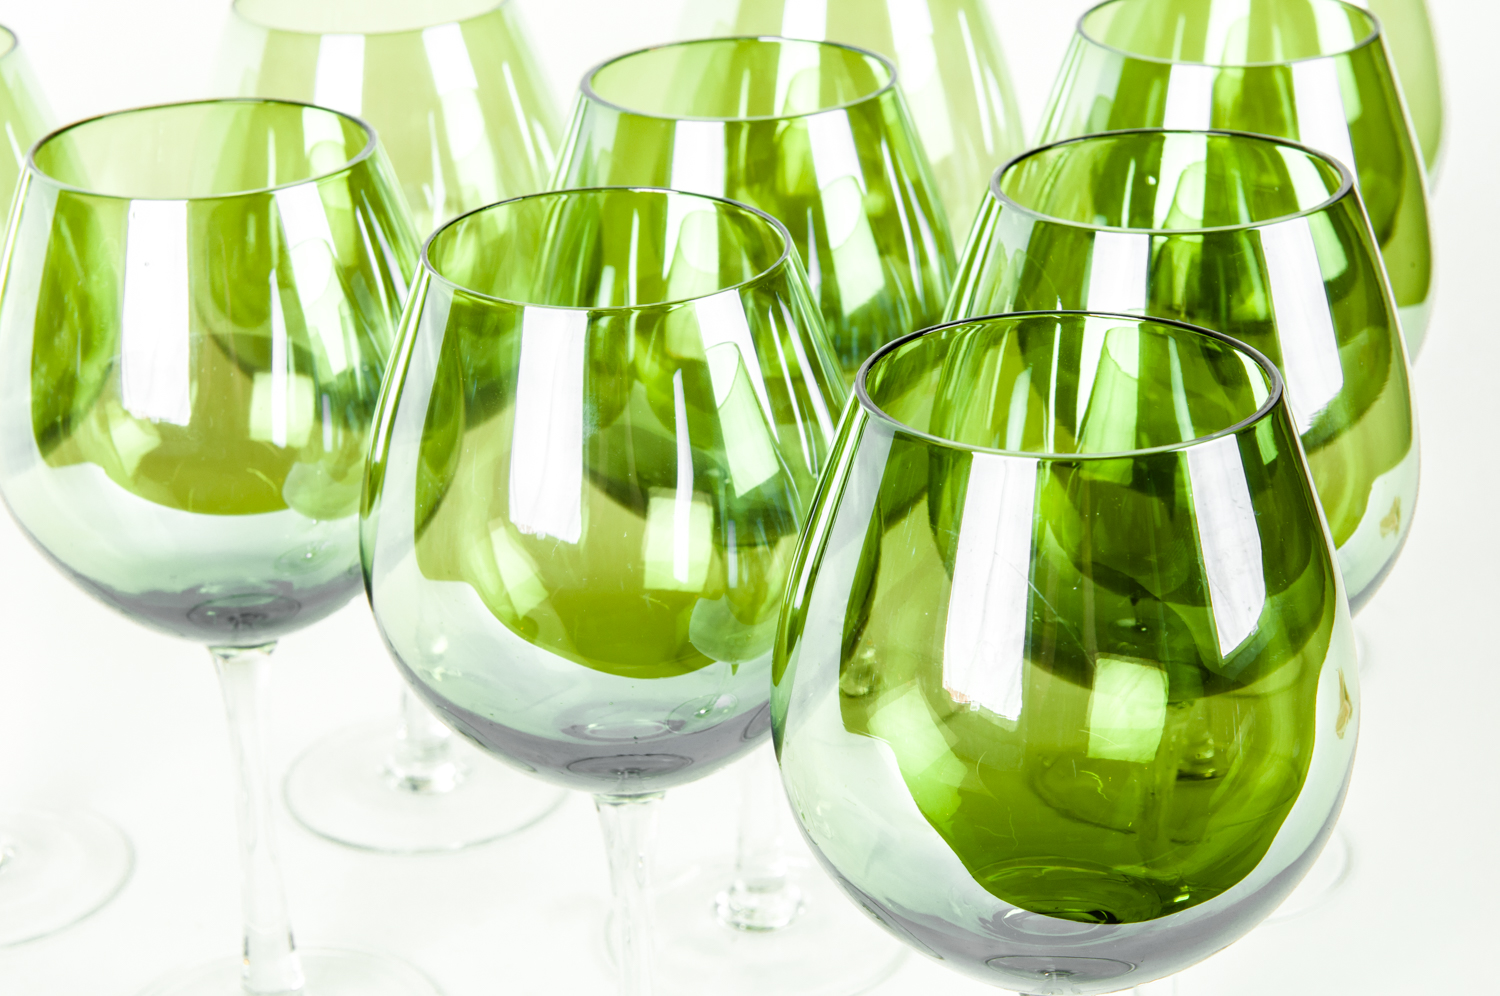 Vintage Set 10 Green Crystal Wine Glasses . — La Maison Supreme Ltd.